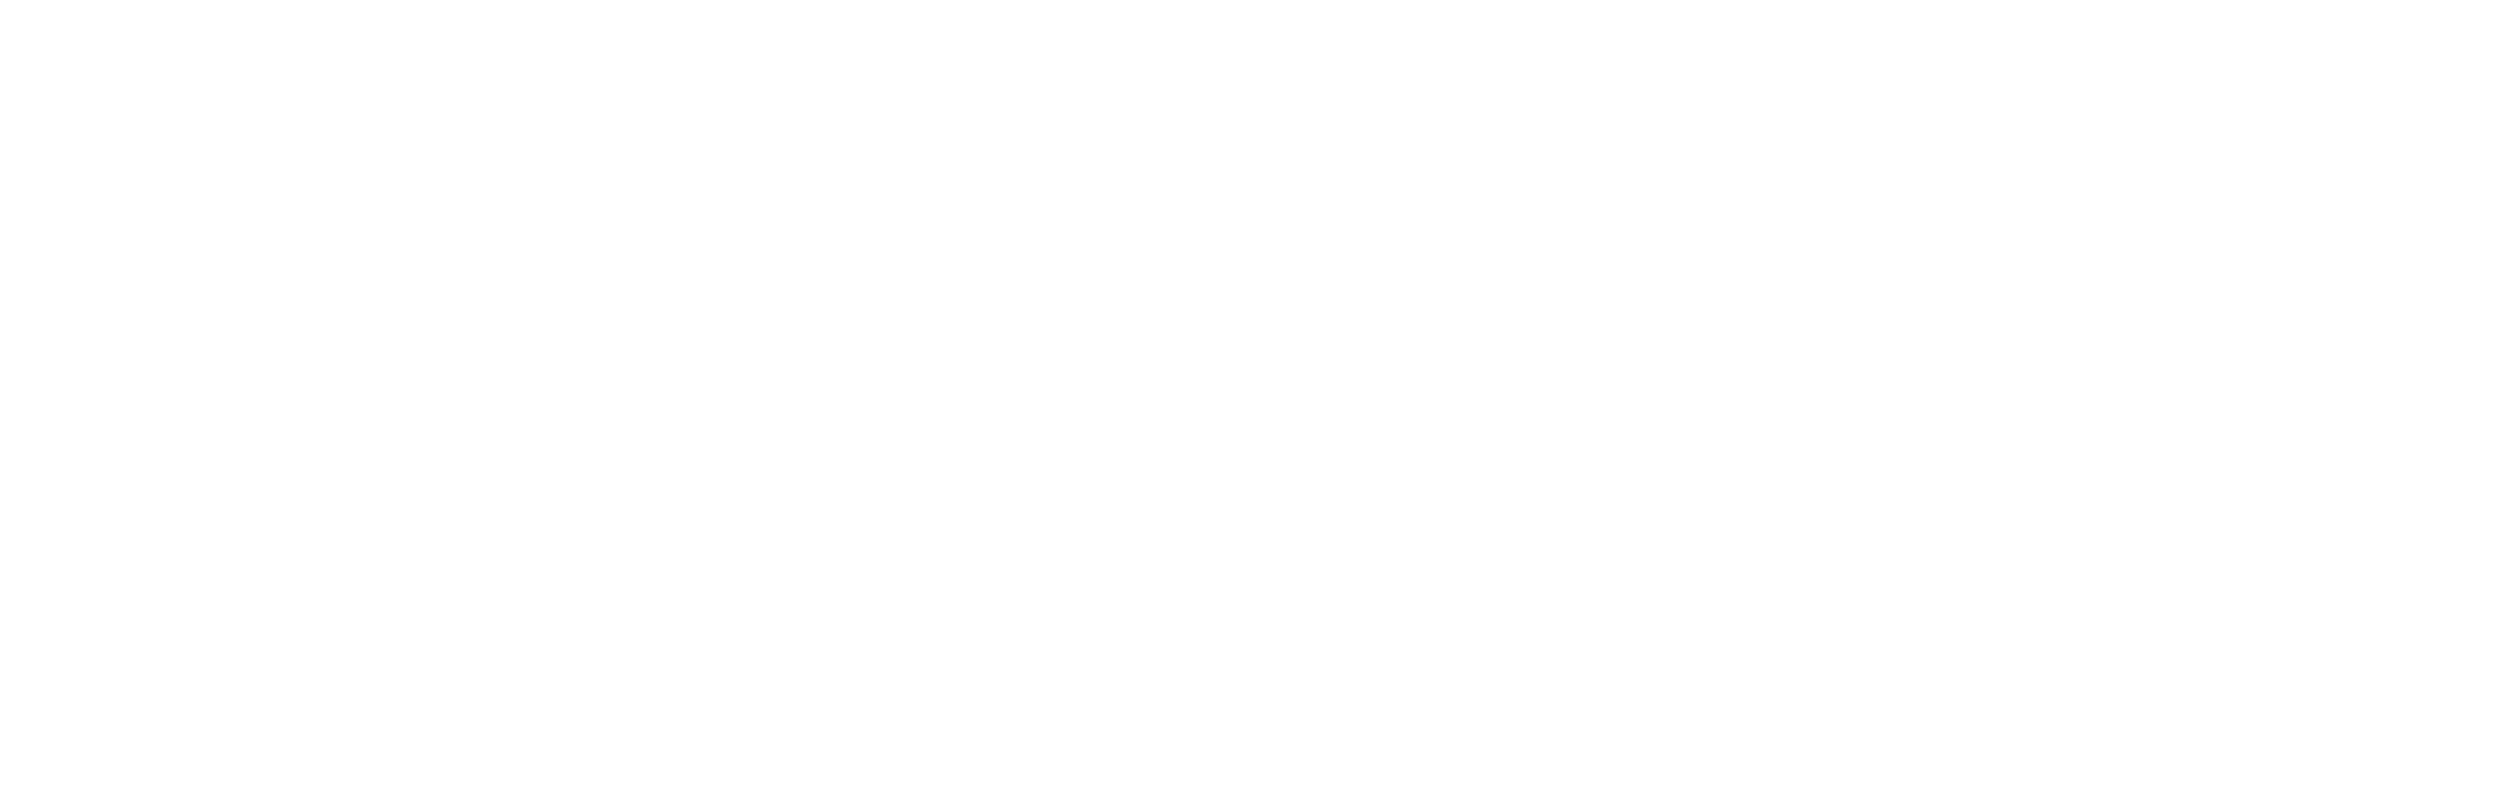 Ocoee Lake Shore Center Logo